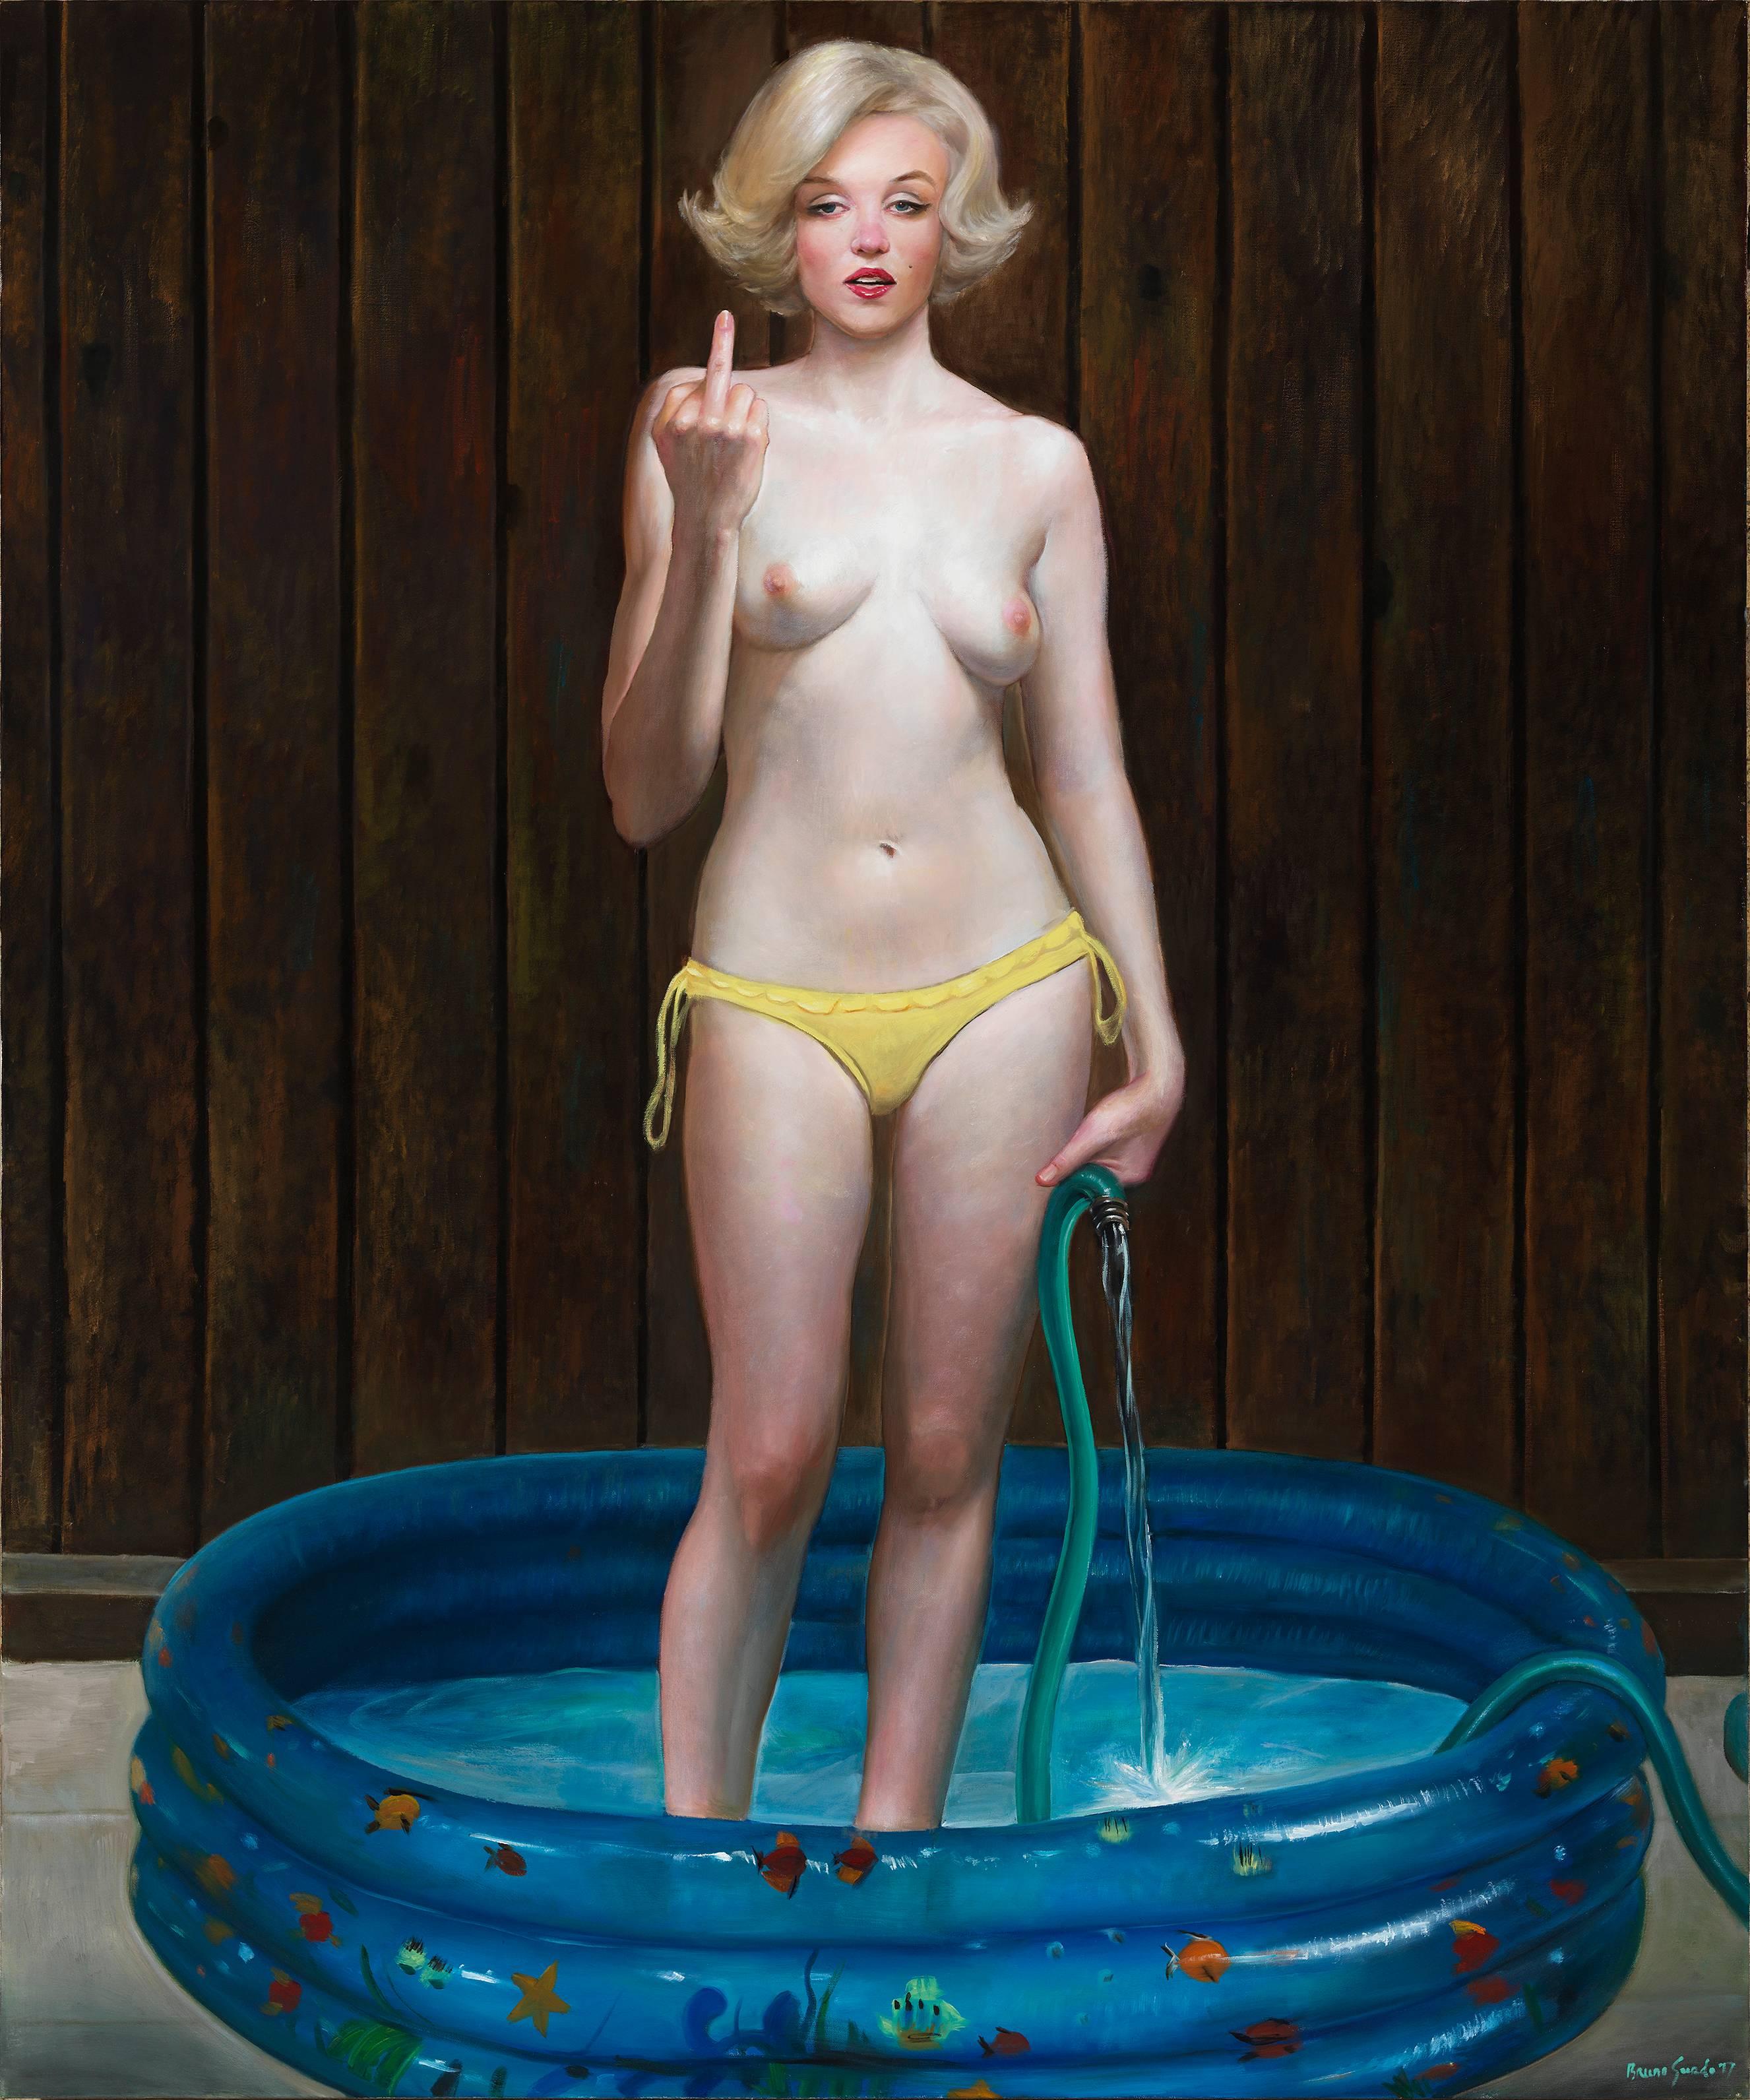 Bruno Surdo Nude Painting - Get Out! - Large Scale Oil Painting of Marilyn Monroe Standing in a Kiddie Pool